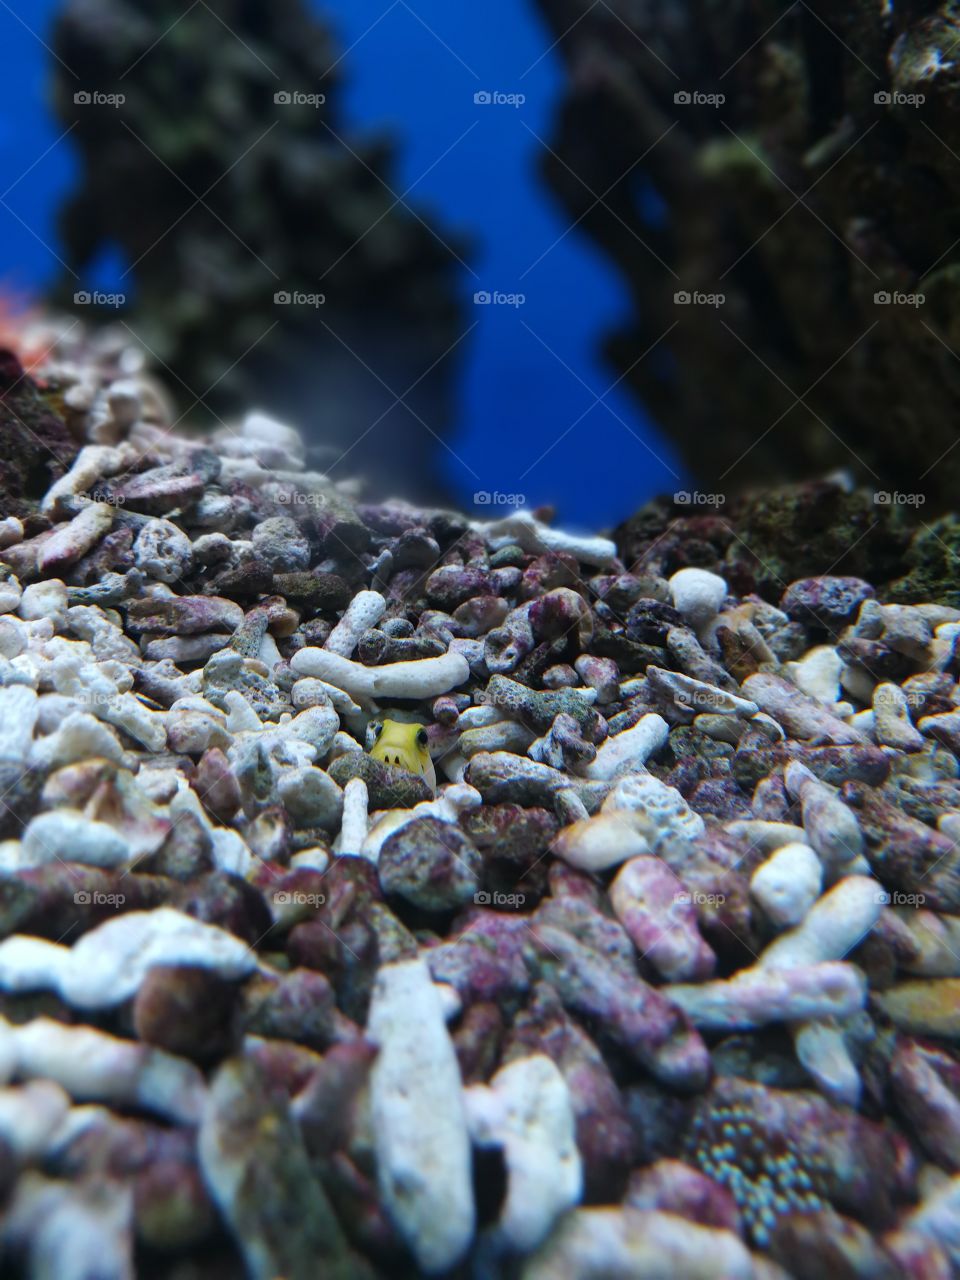 Fish hiding